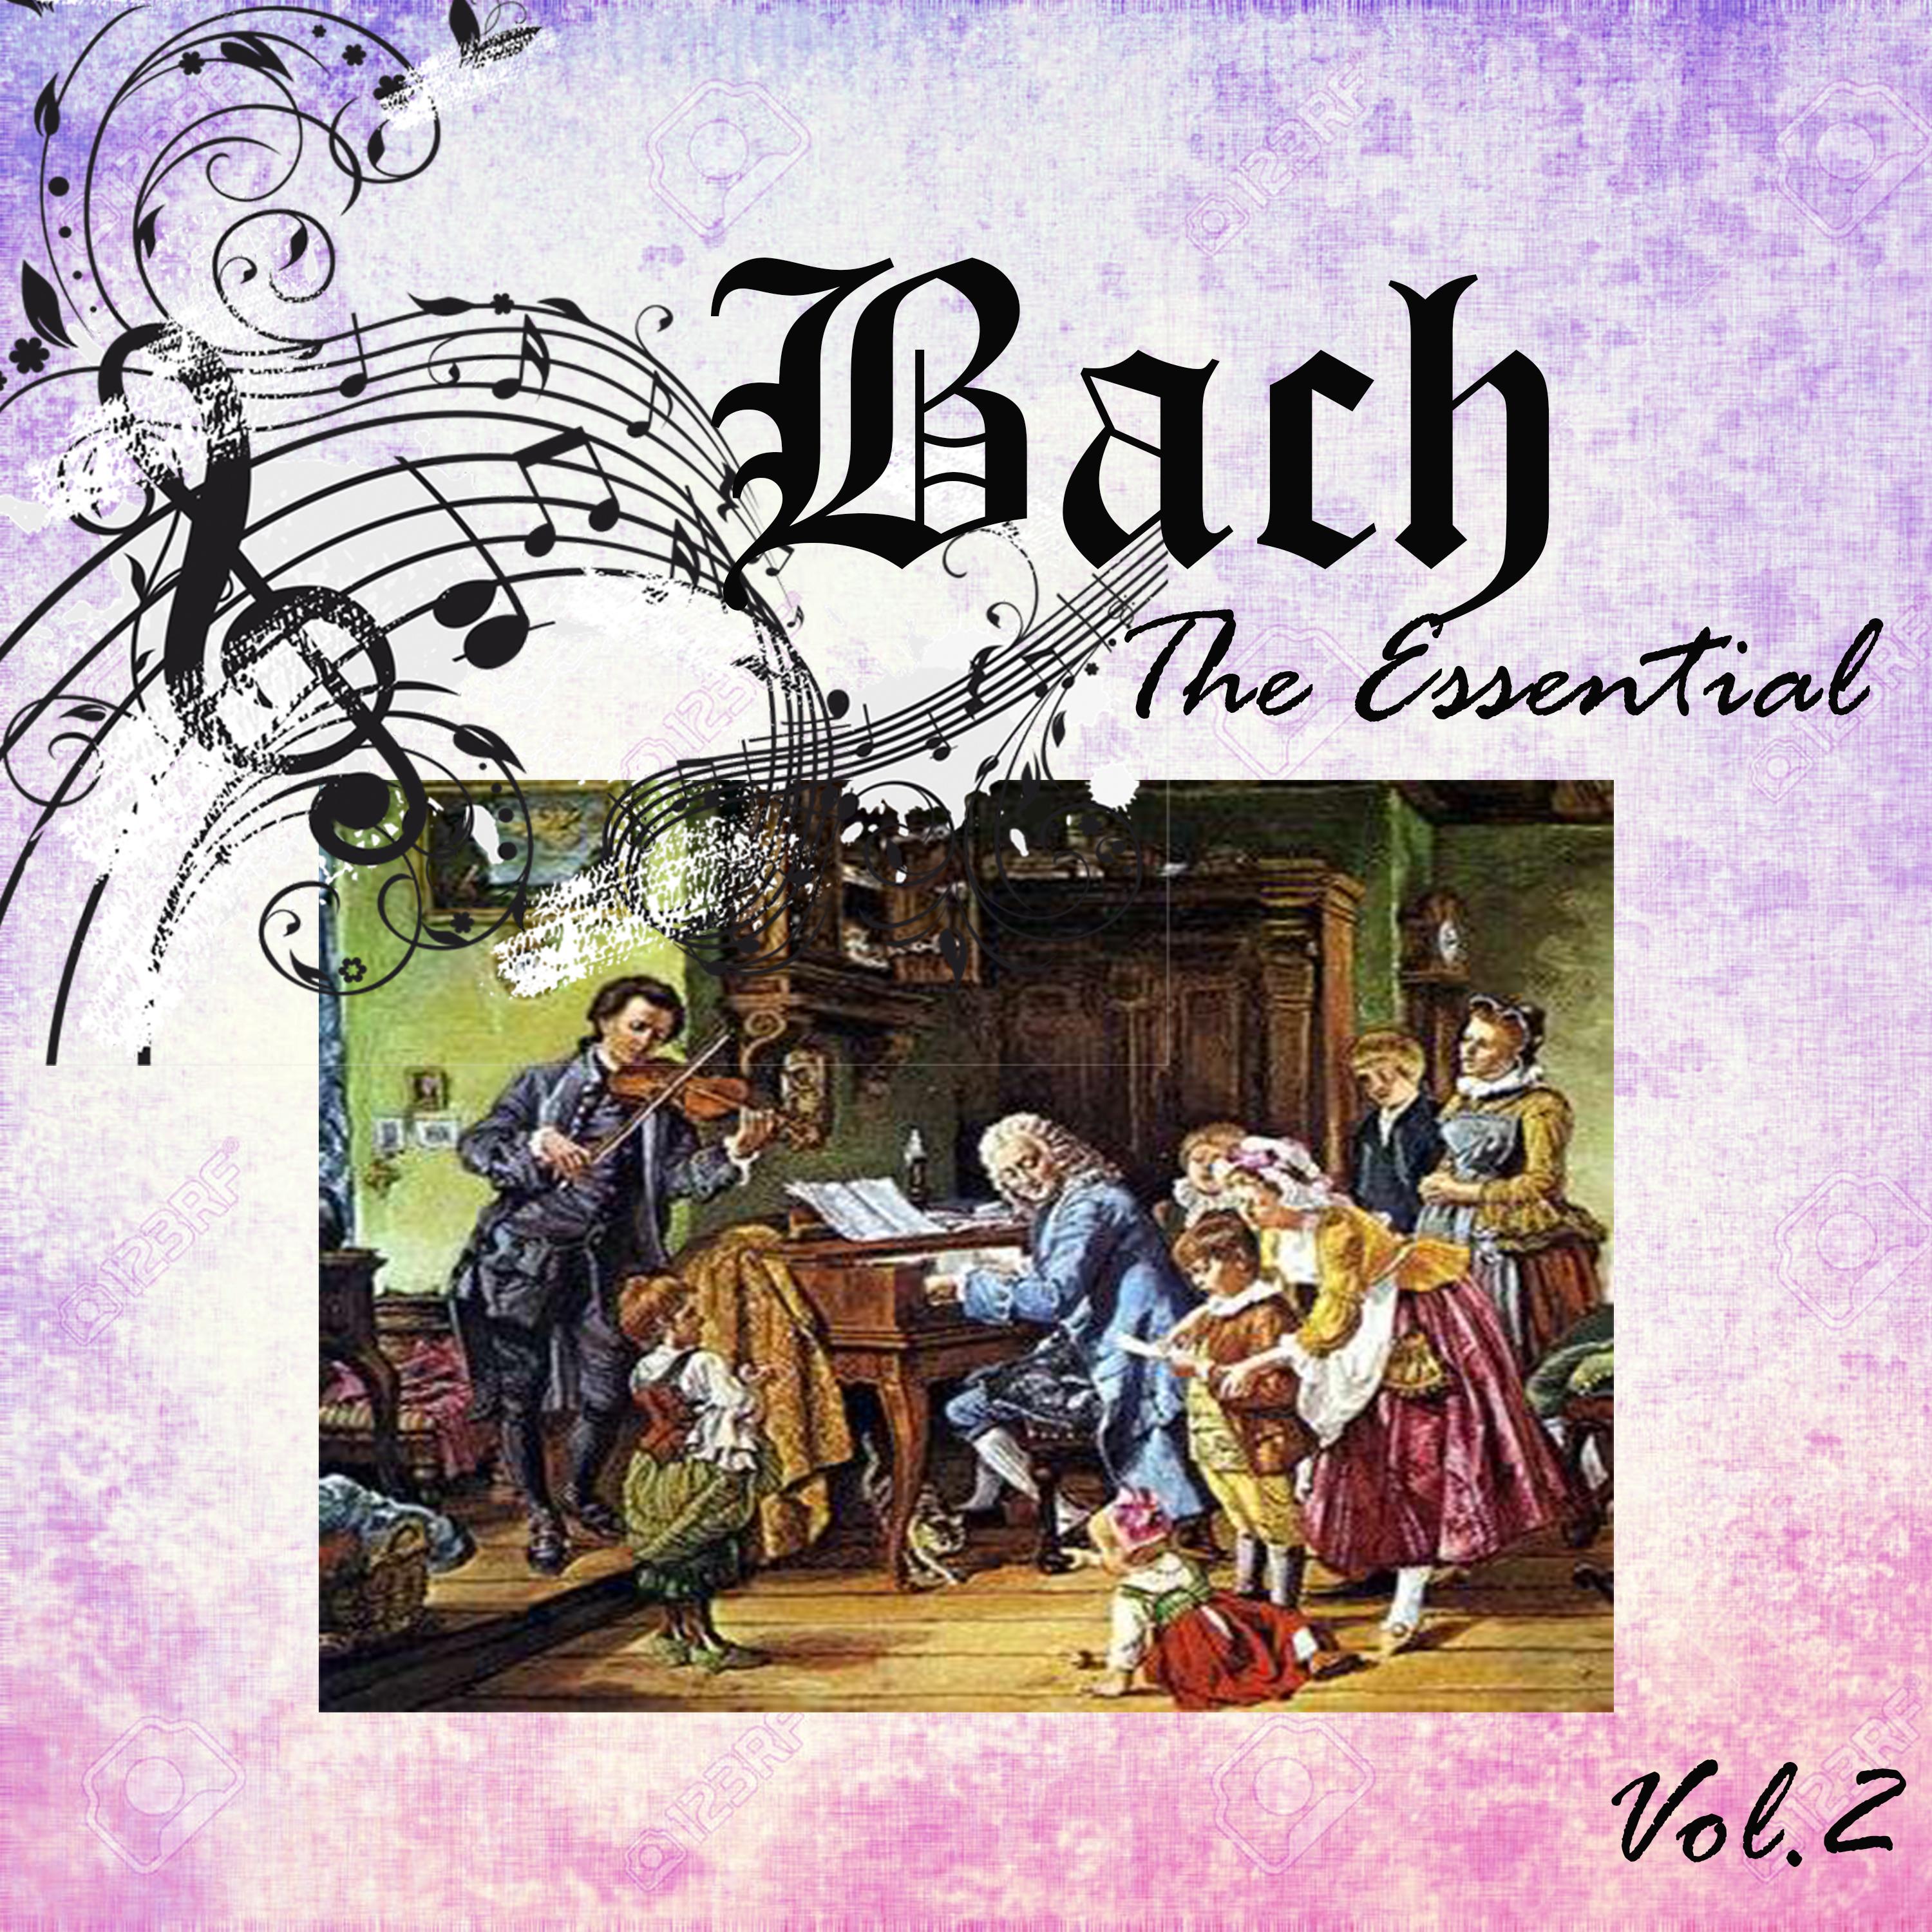 Bach - The Essential, Vol. 2